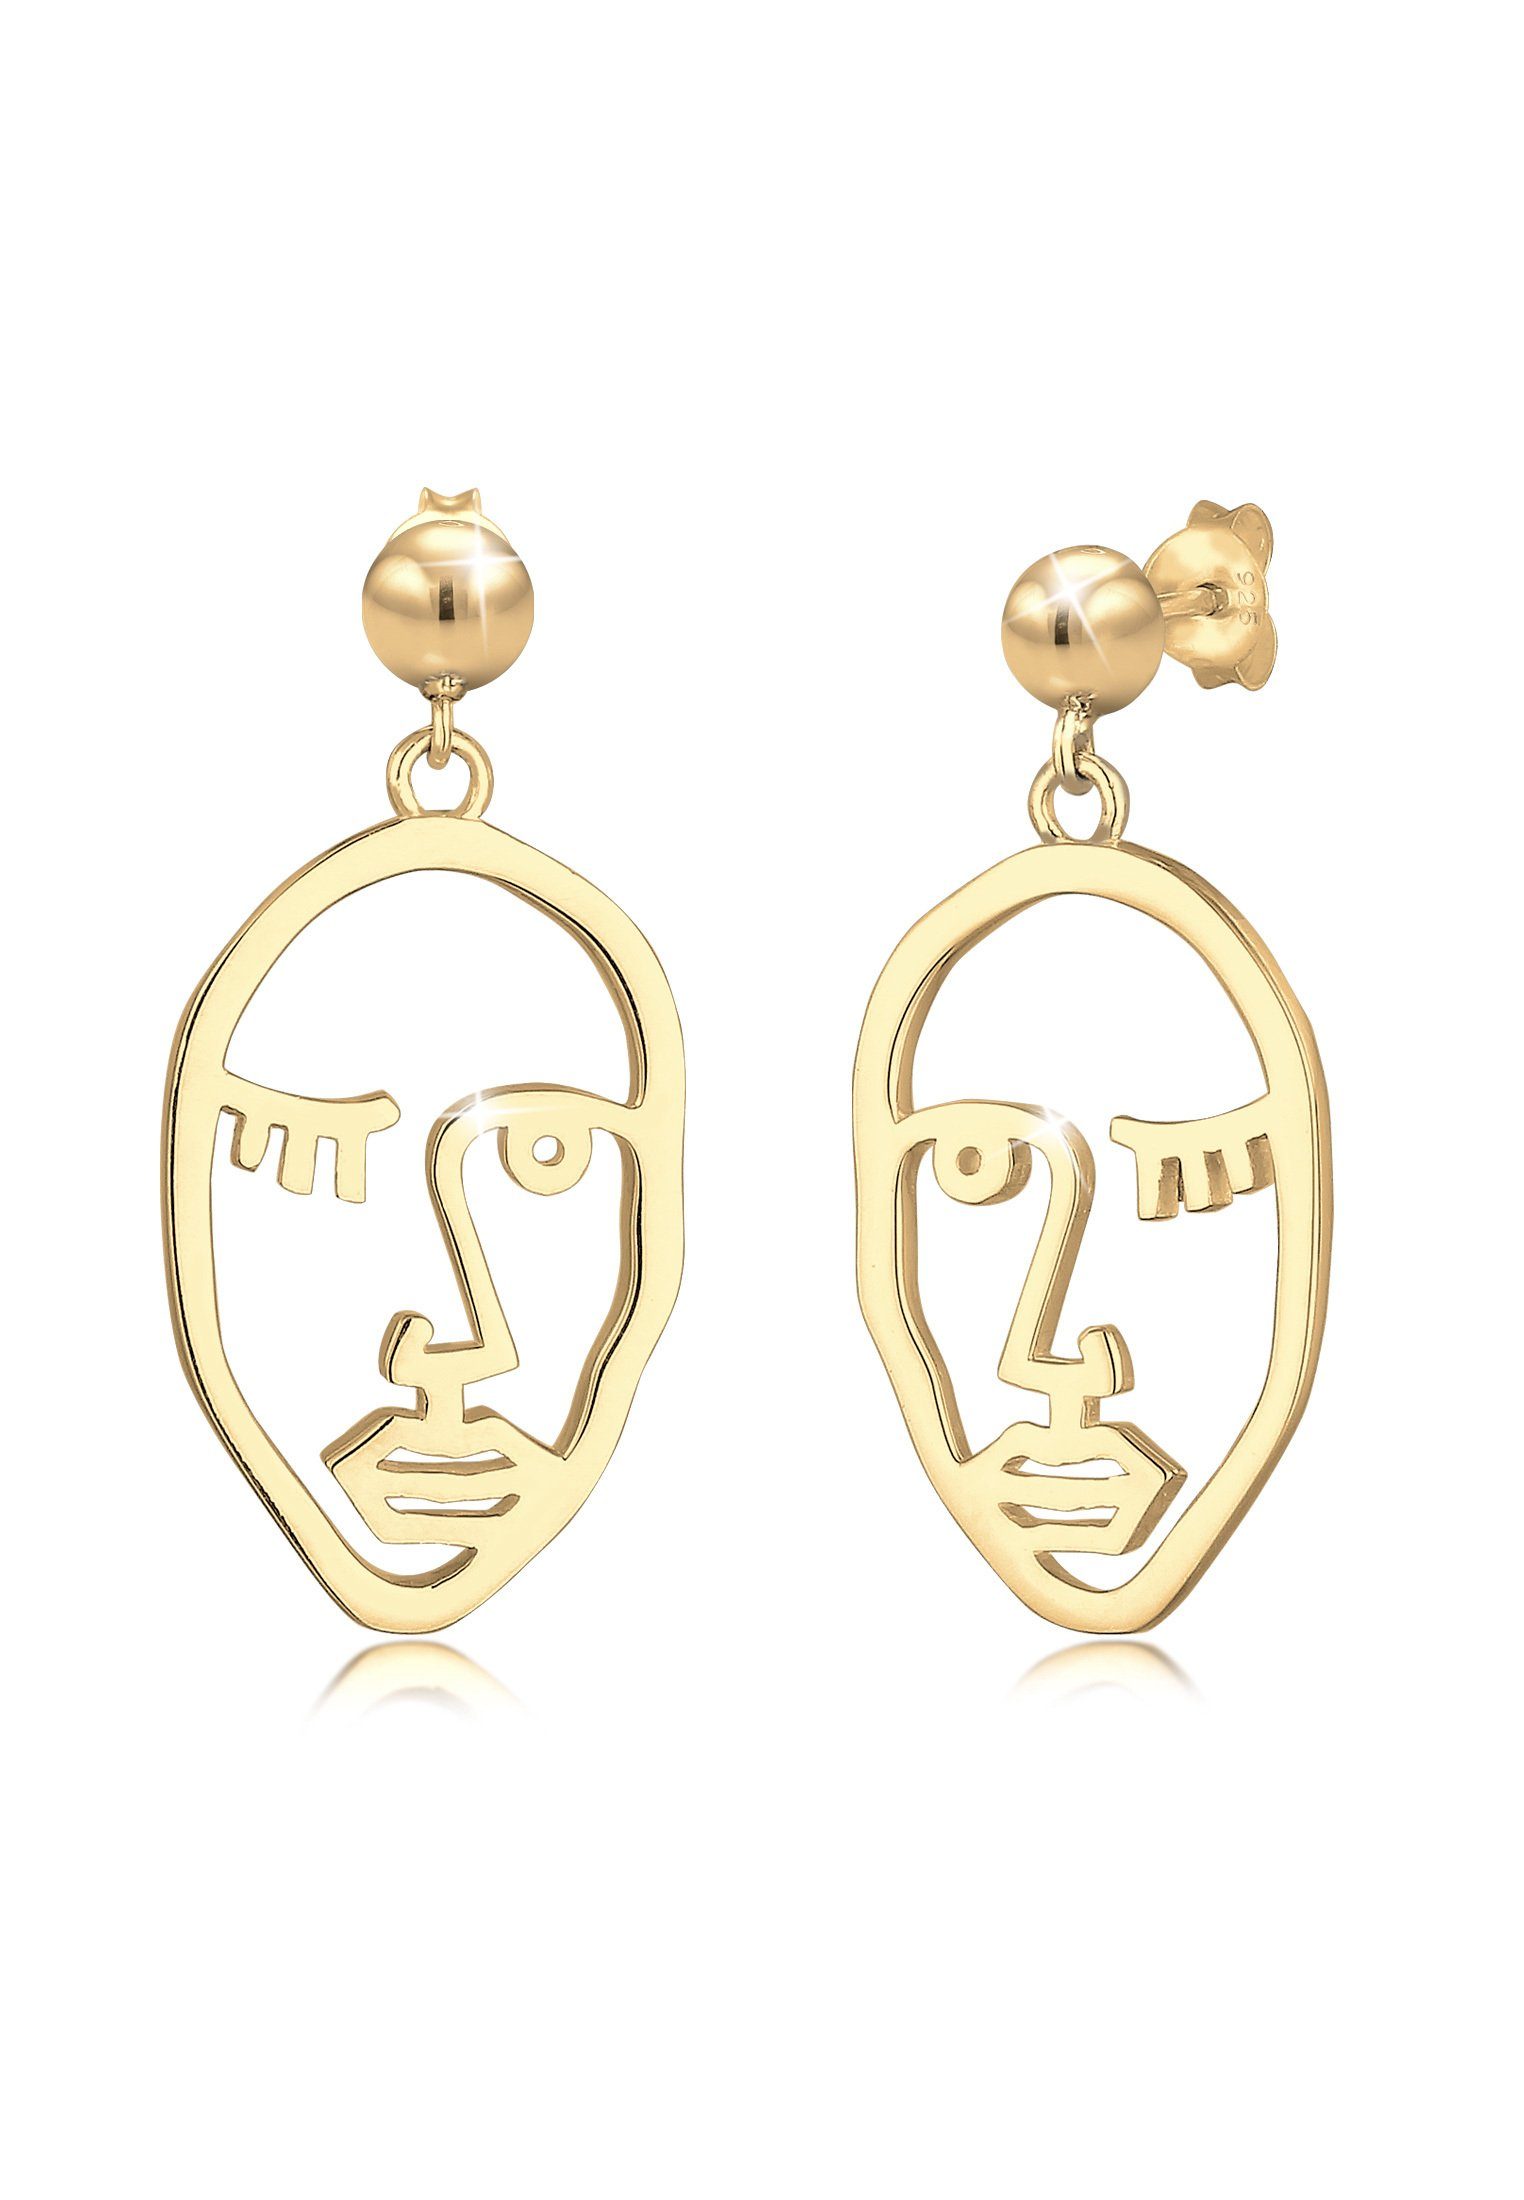 Elli Paar Ohrhänger Ohrhänger Gesicht Design Blogger Trend 925 Silber Gold